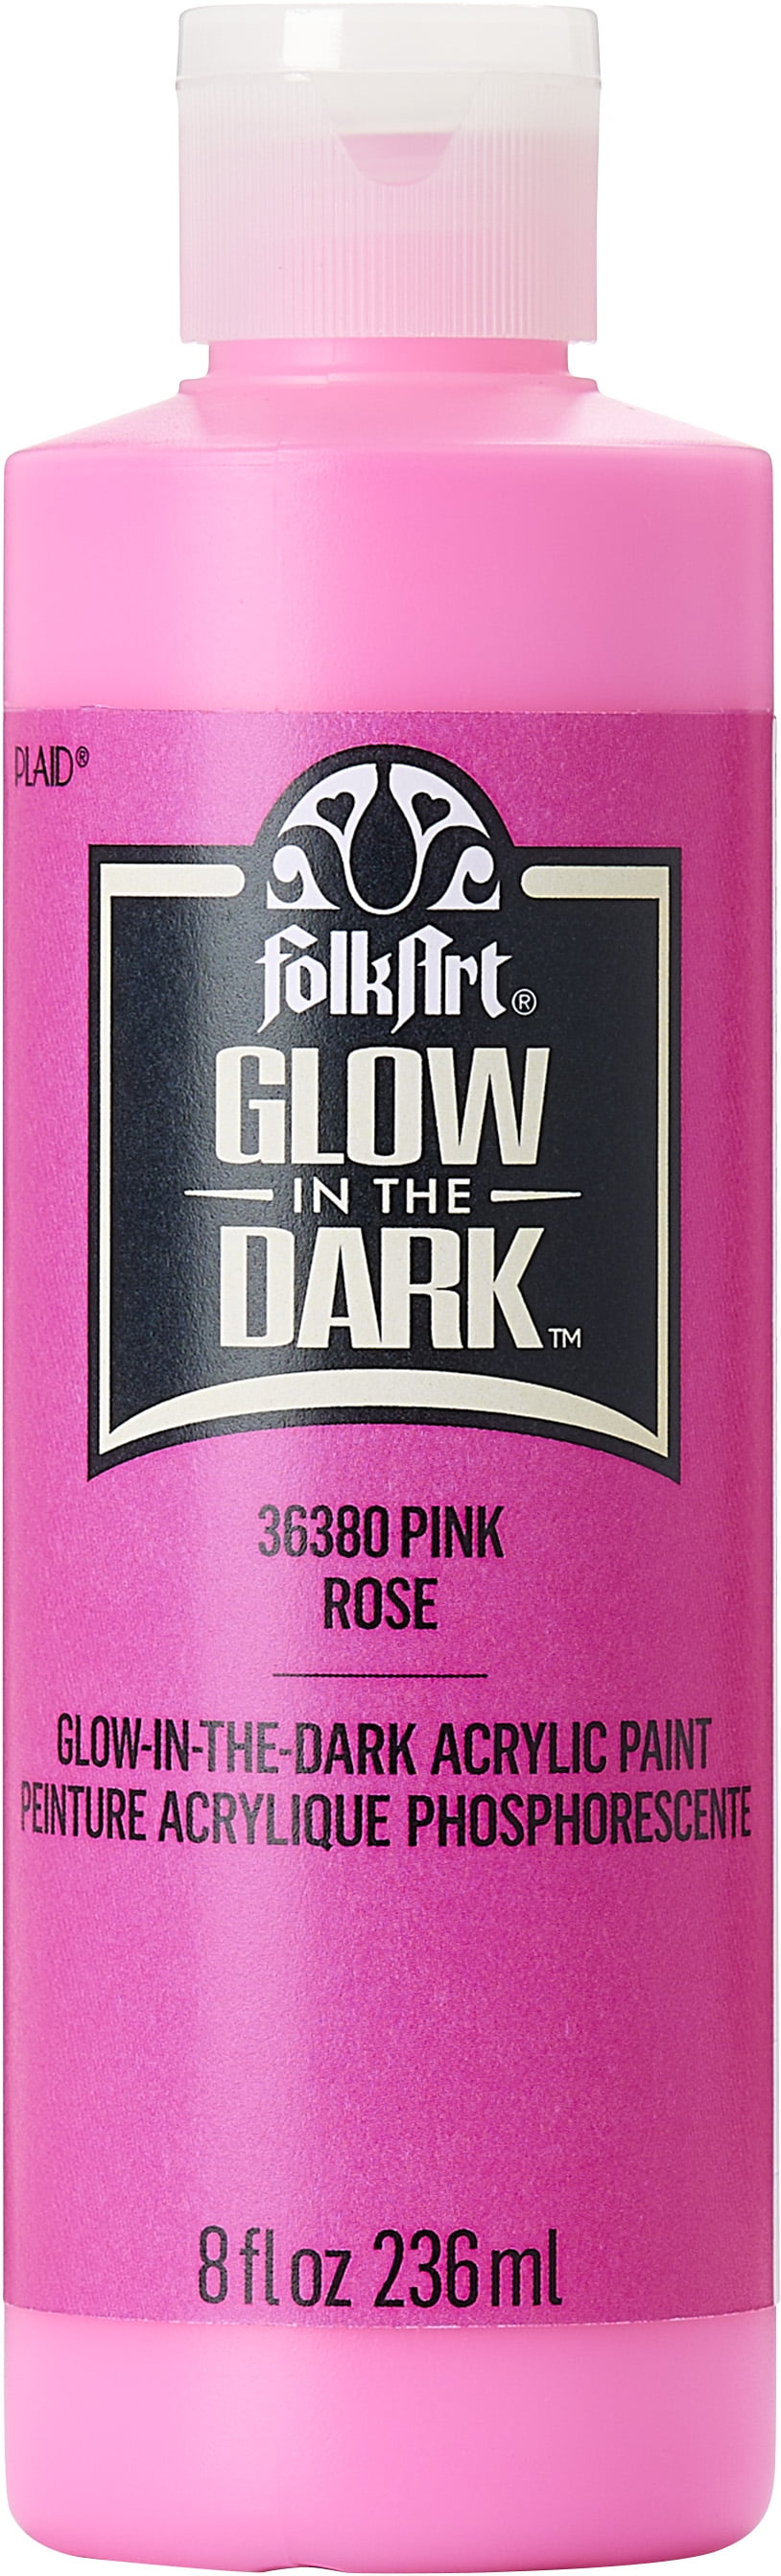 FolkArt Glow-in-the-Dark Acrylic Craft Paint, Matte Finish, Pink, 2 fl oz